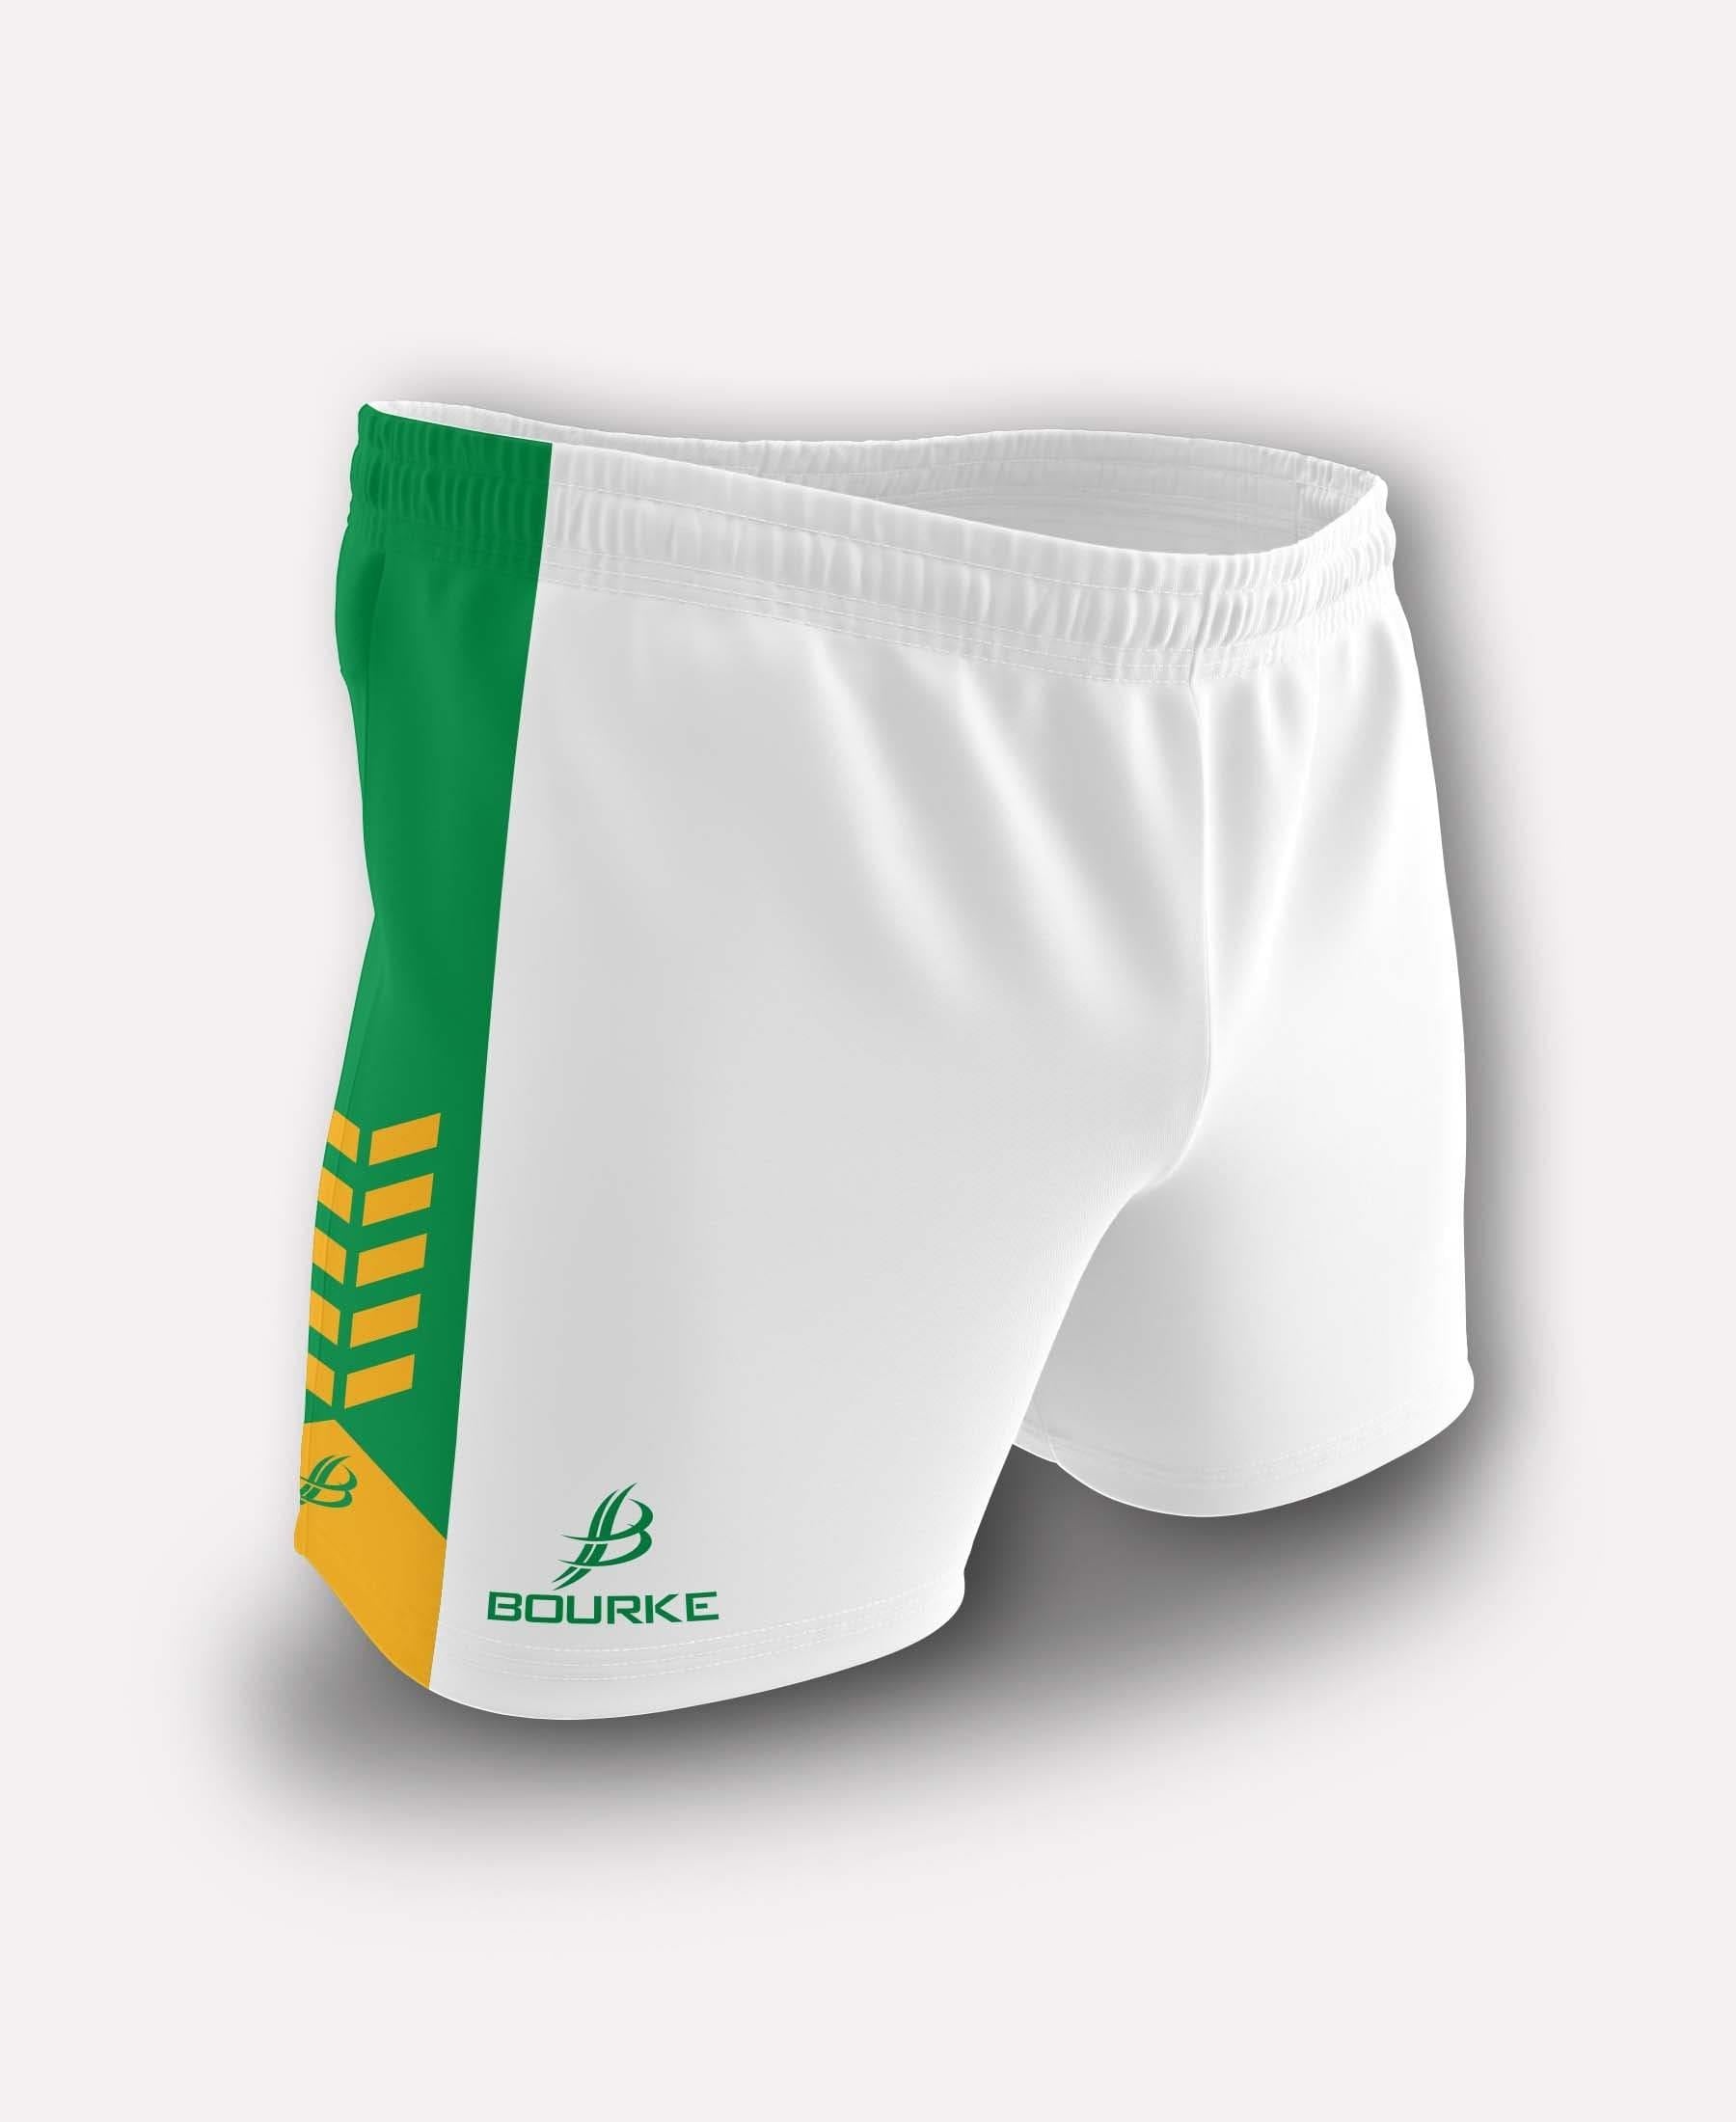 Chevron Adult Shorts (White/Green/Amber) - Bourke Sports Limited